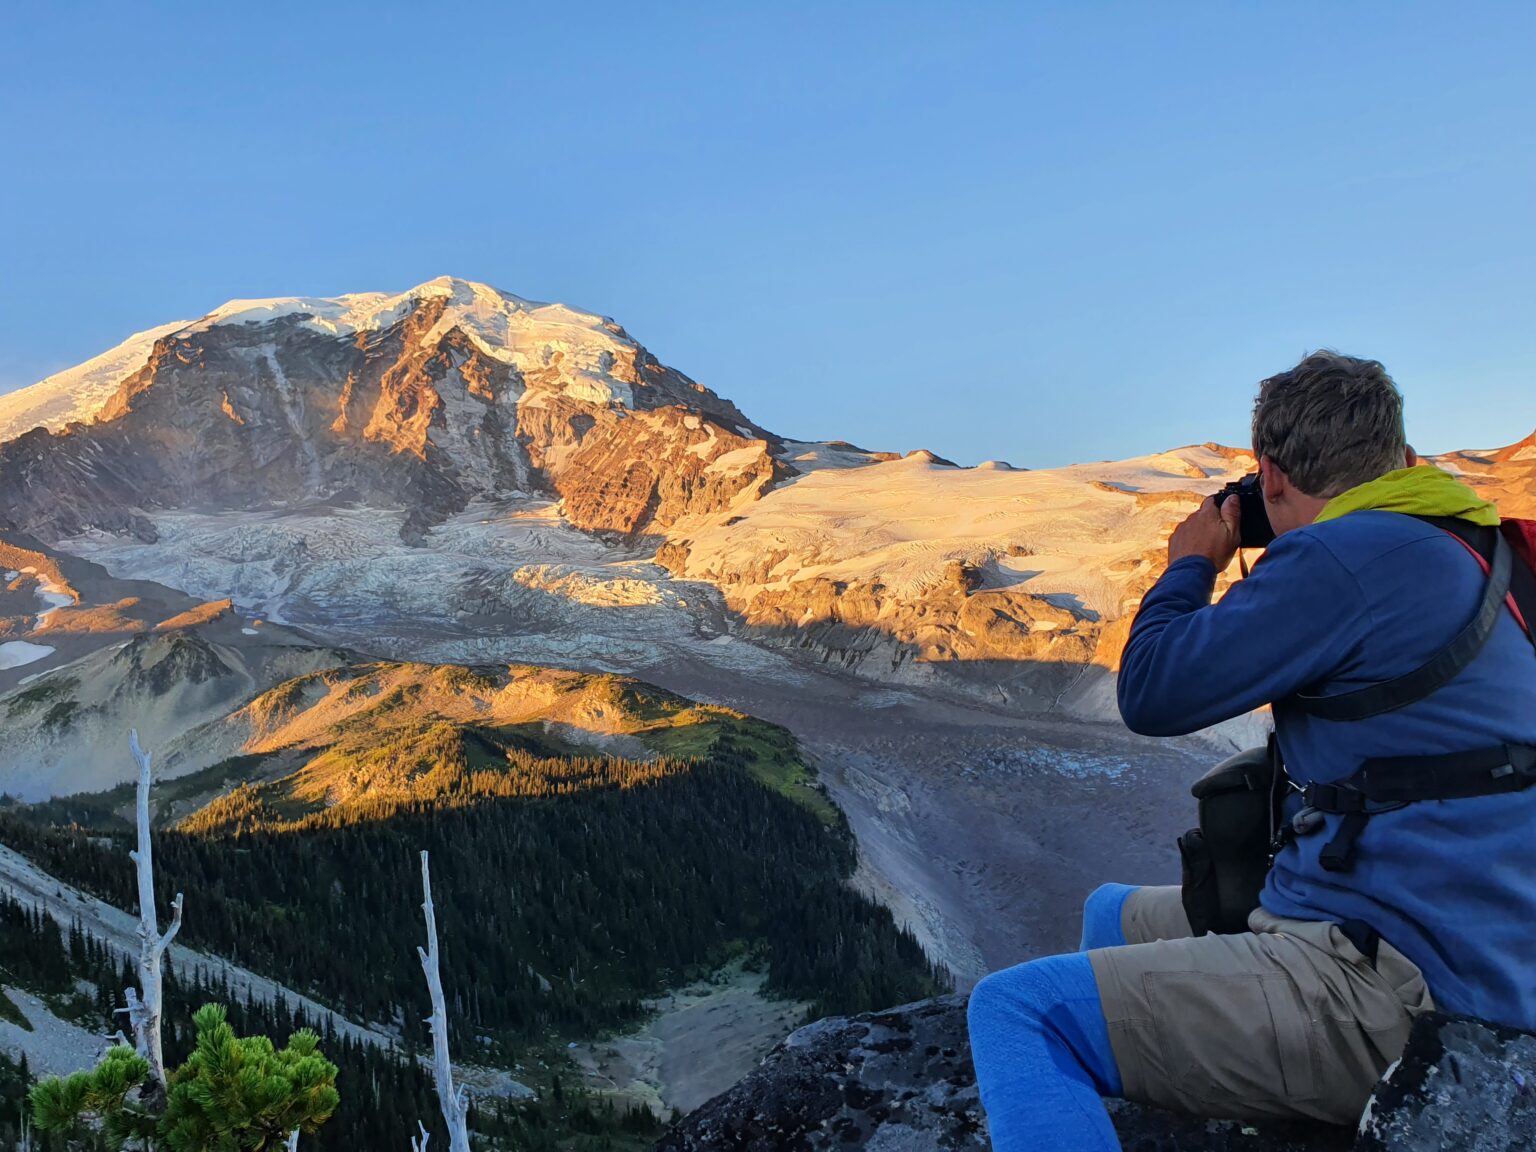 Jason Hummel taking a photo of Mount Rainier at sunrise